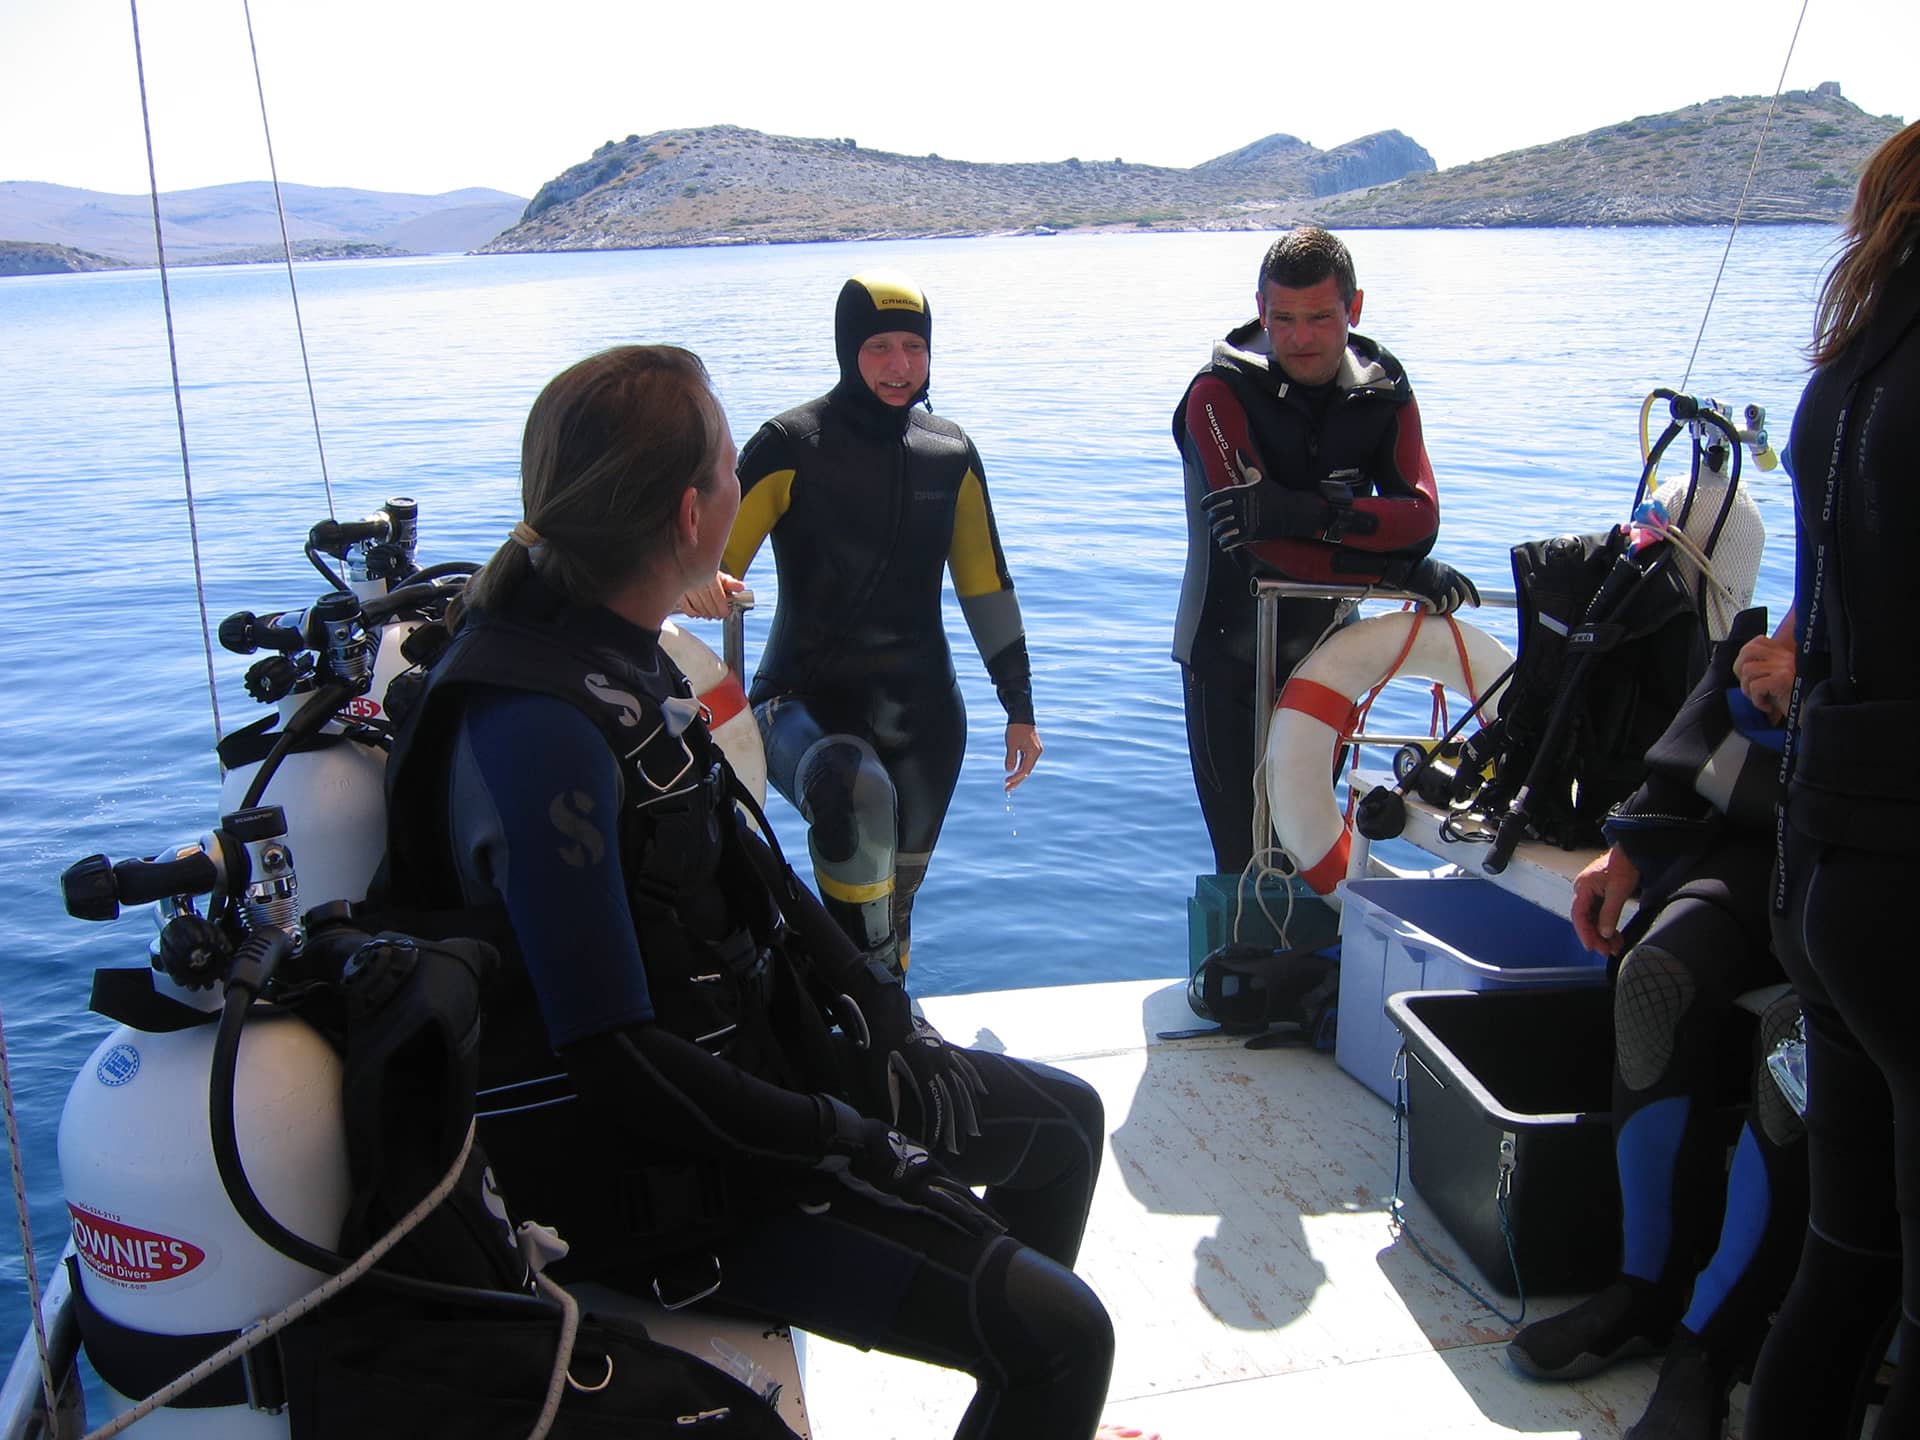 Scuba diving with Ronac in murter and kornati